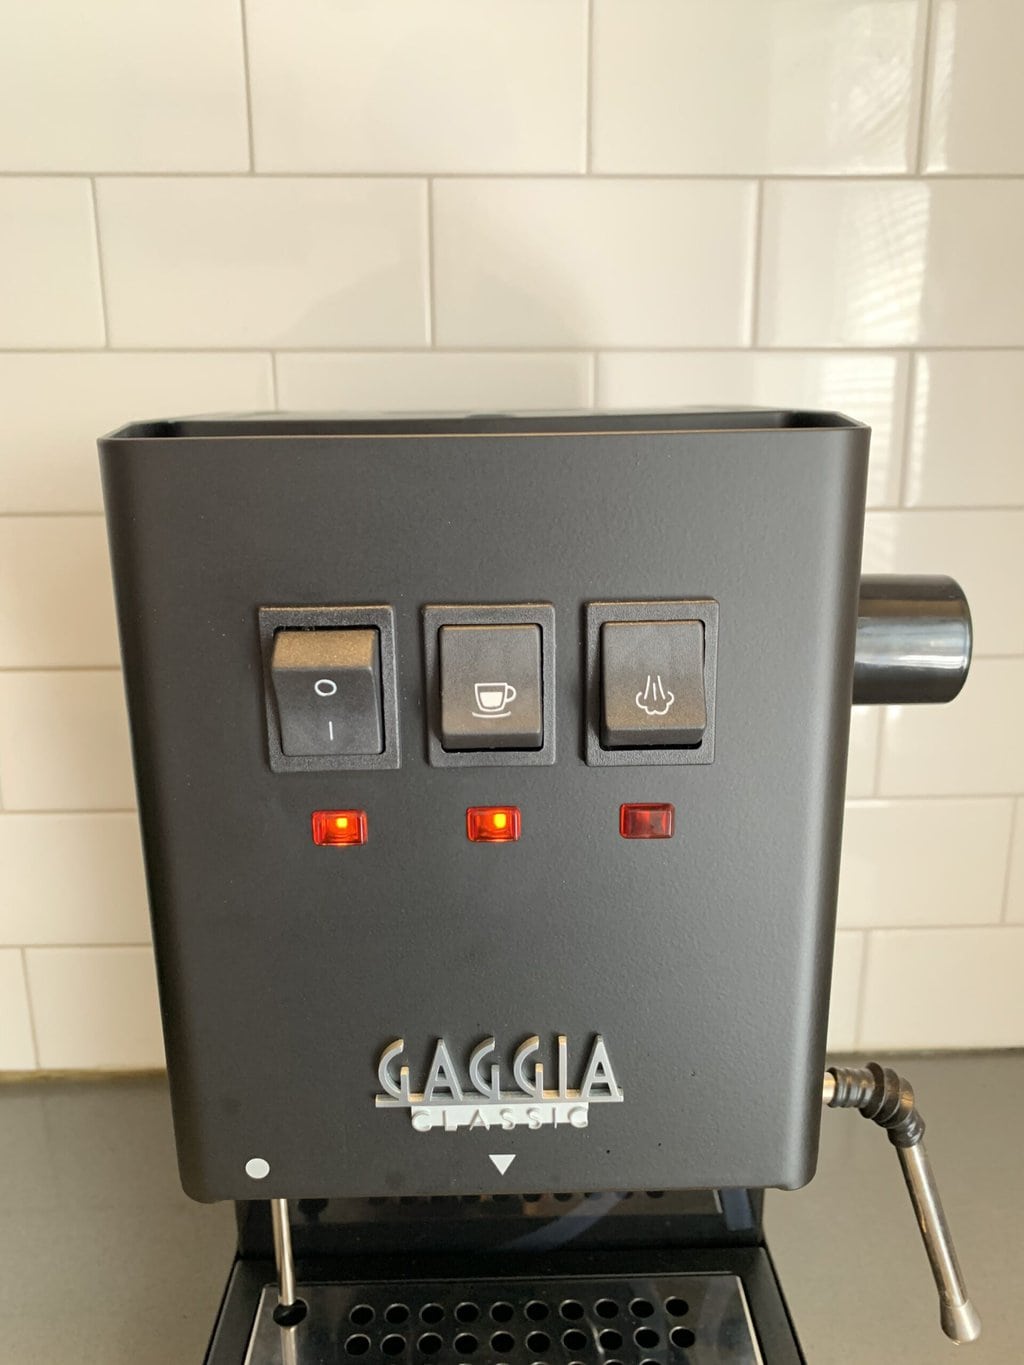 3 operation buttons on the Gaggia Classic Pro espresso machine 